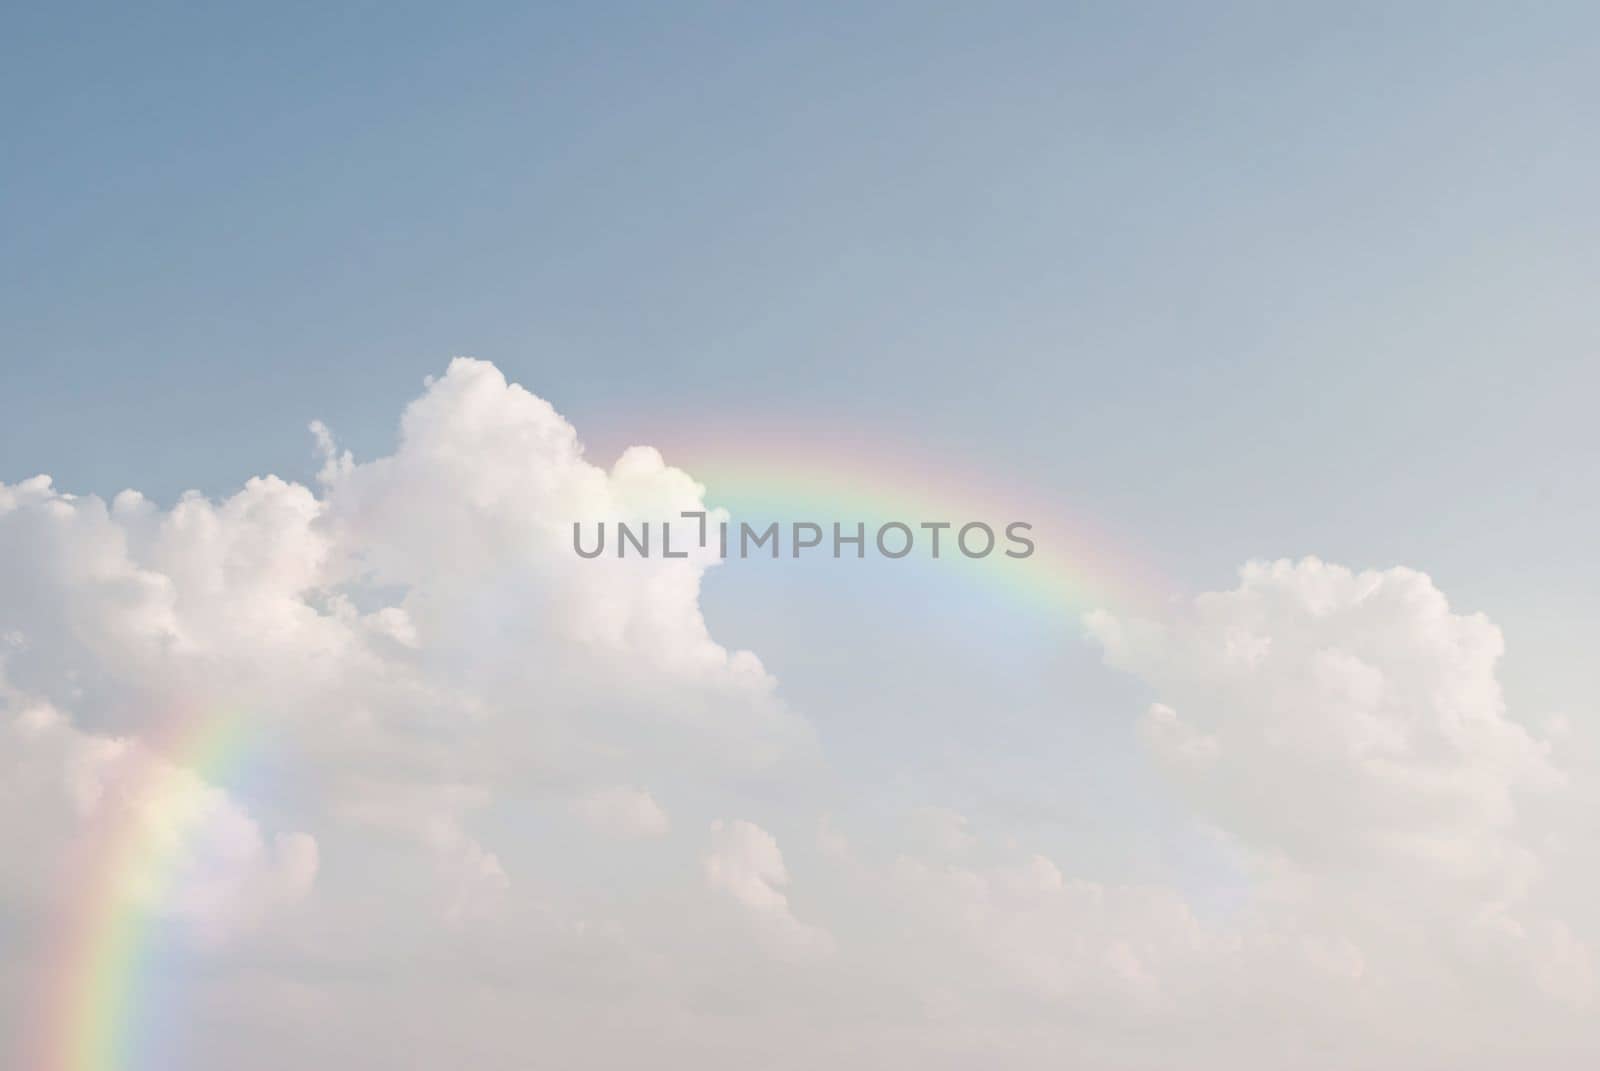 rainbow in the blue sky after the rain by rakoptonLPN